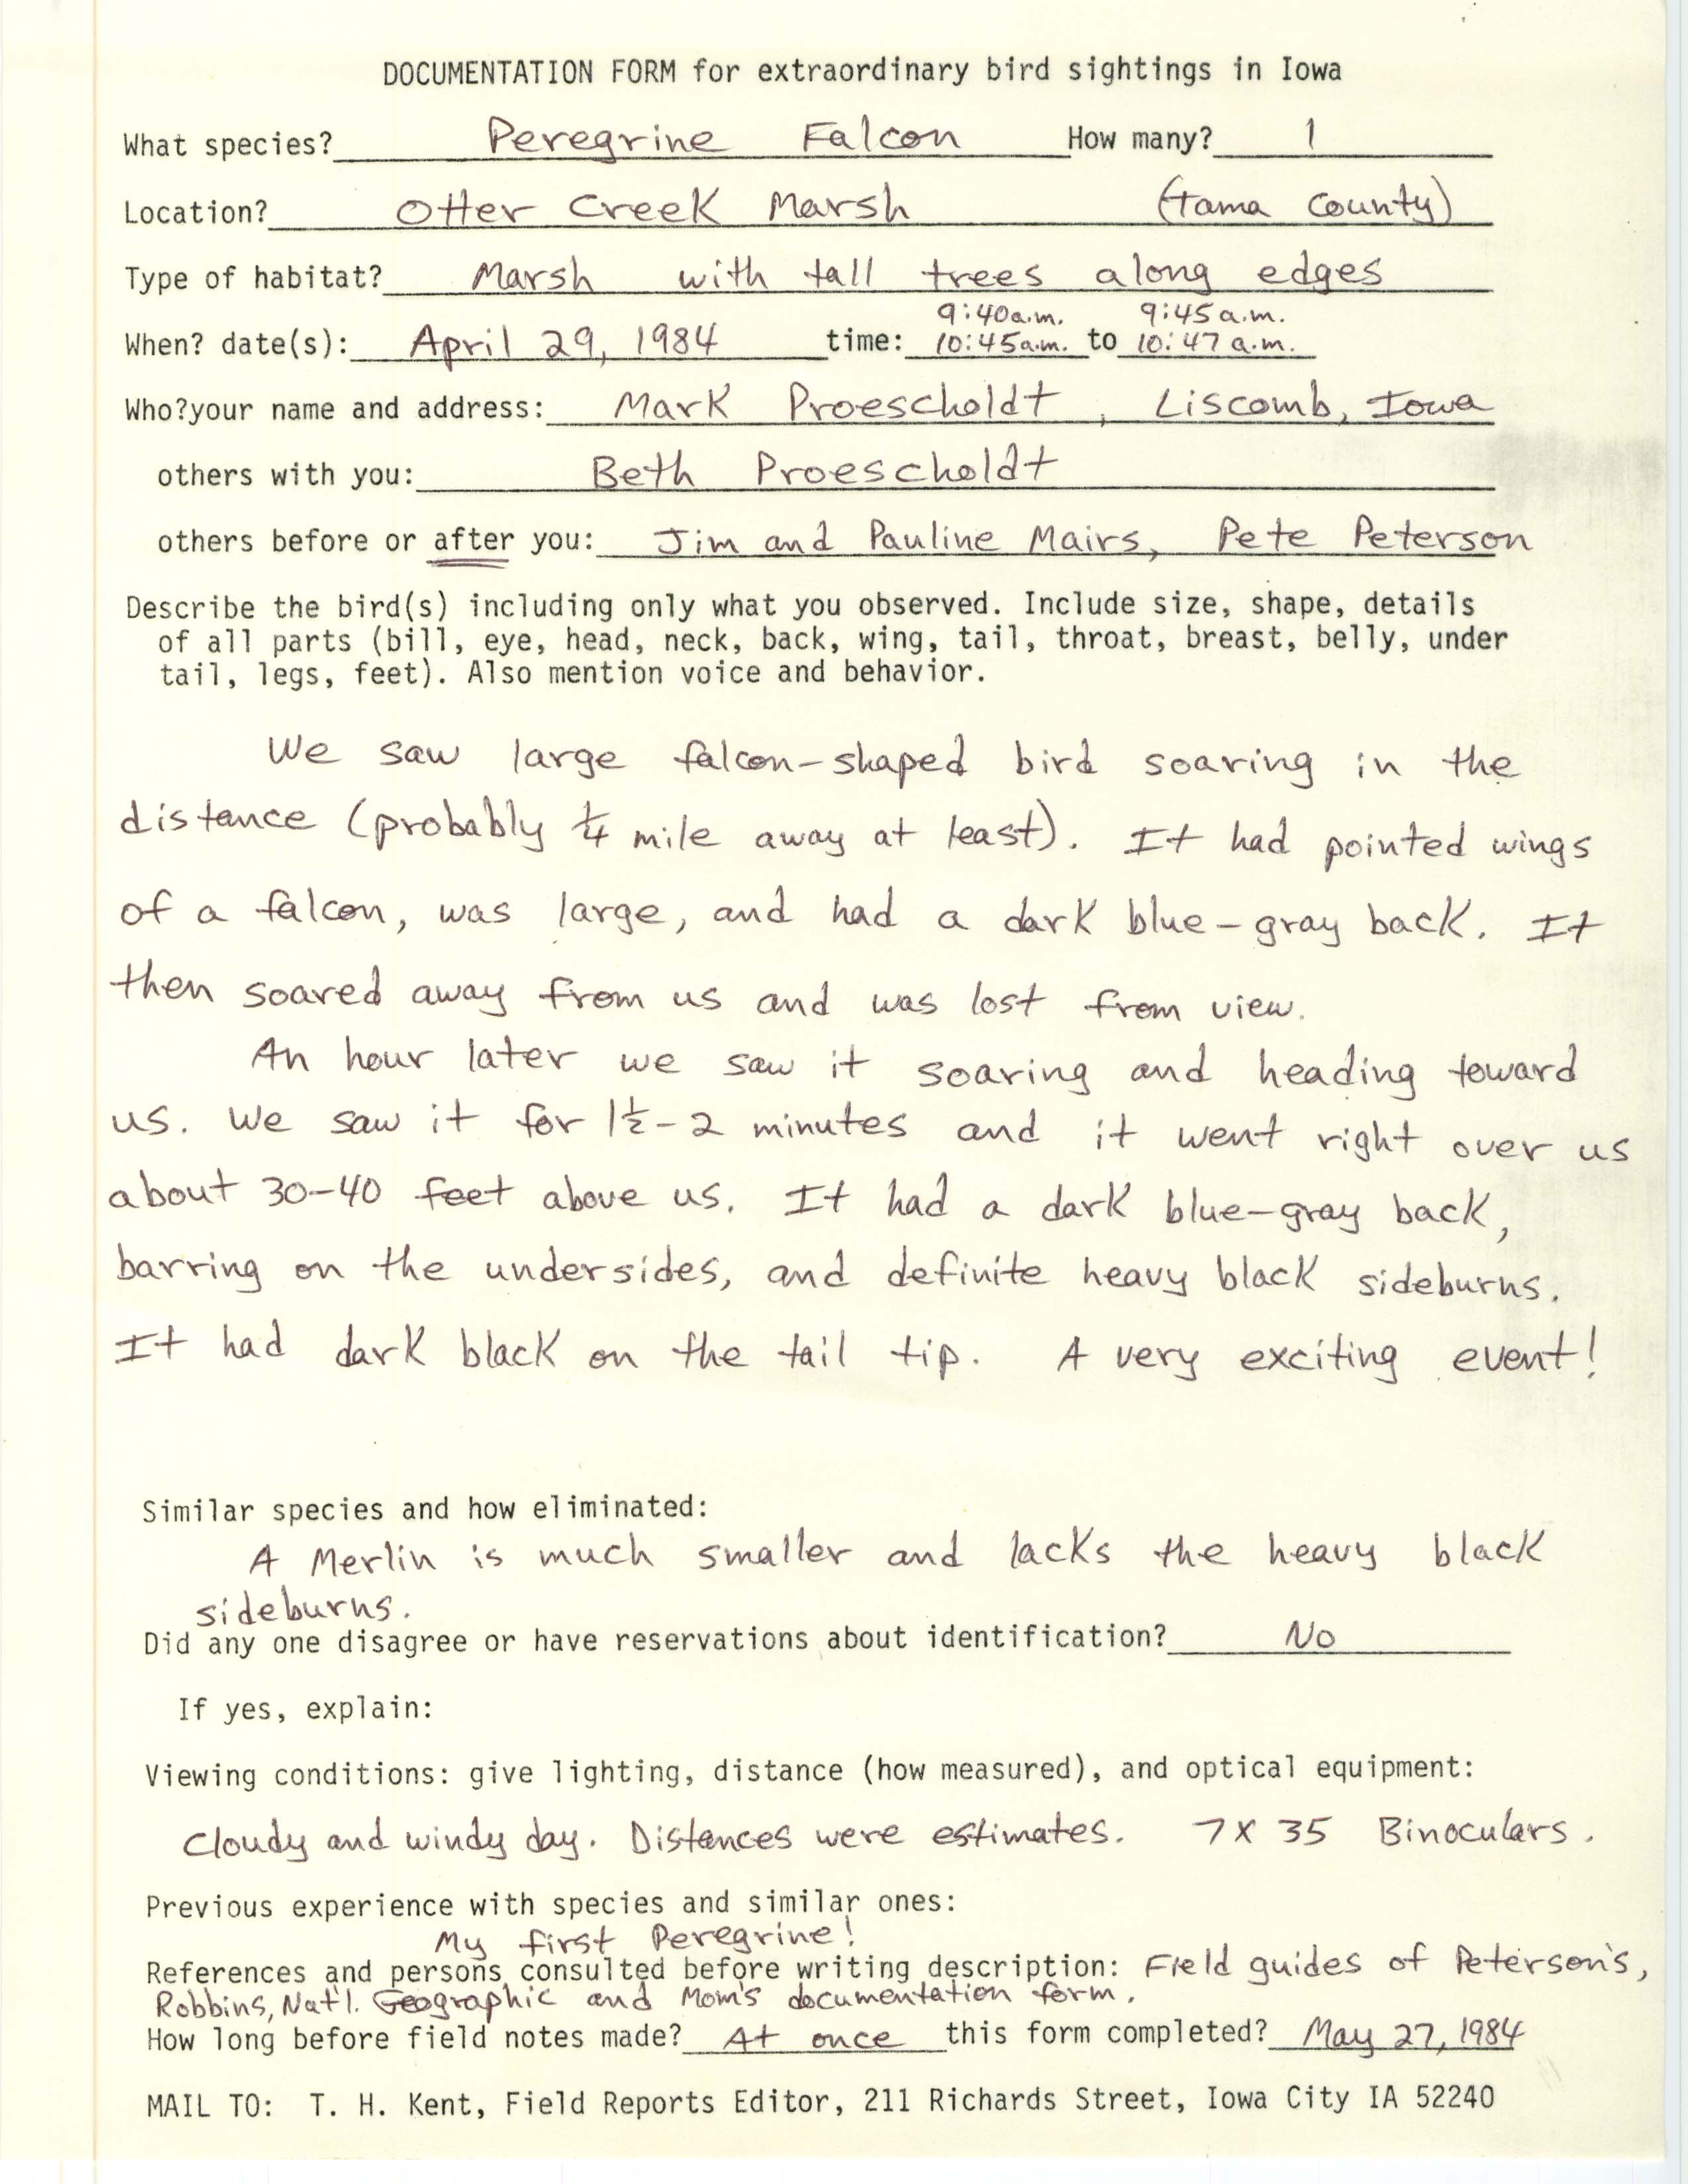 Rare bird documentation form for Peregrine Falcon at Otter Creek Marsh, 1984